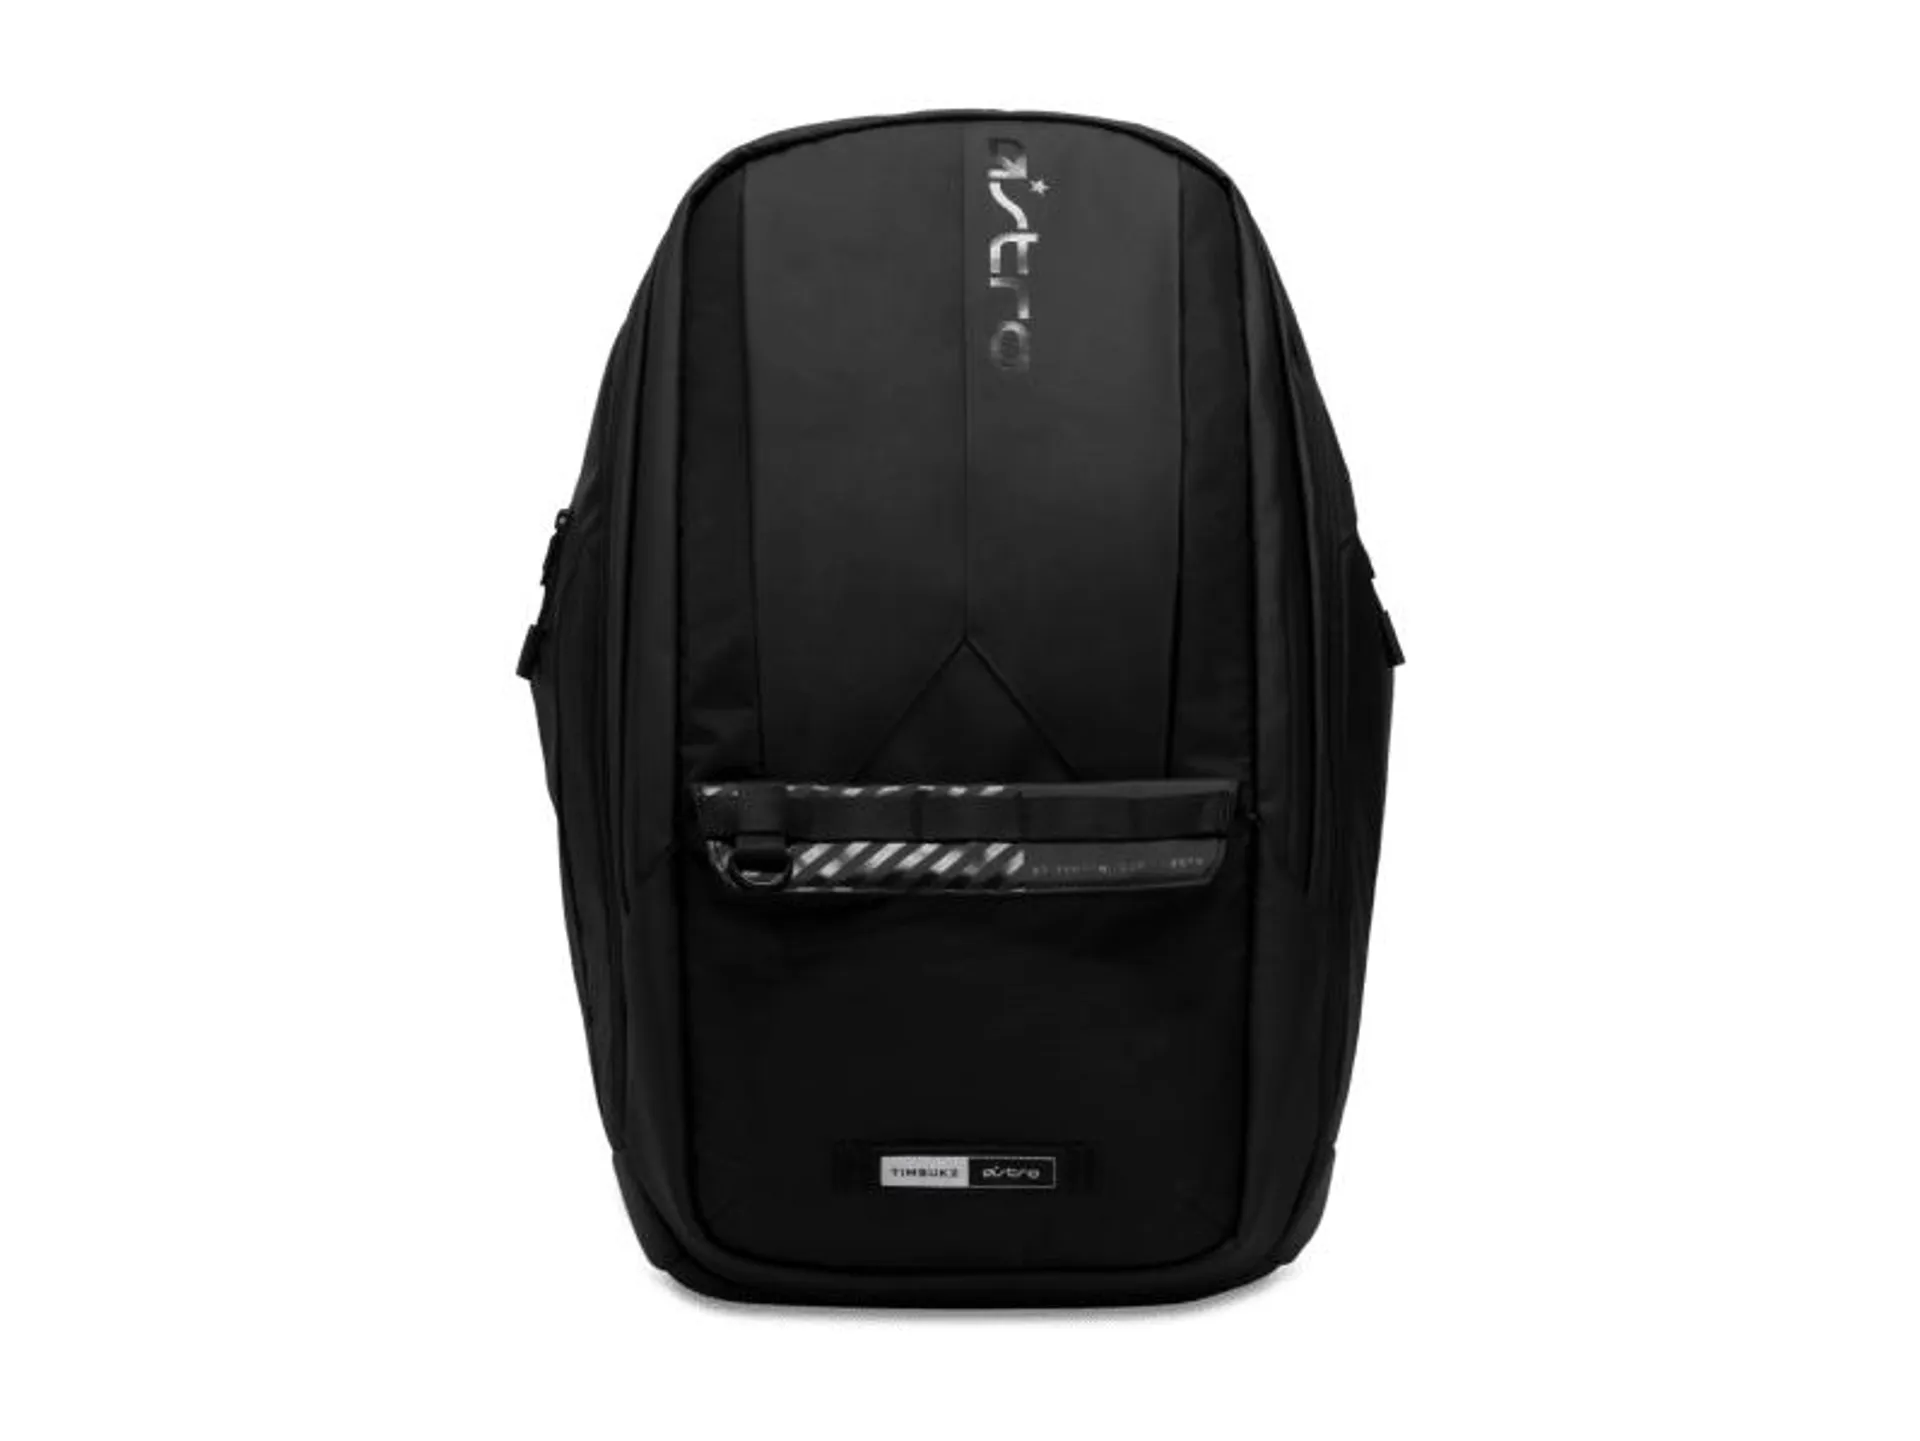 Timbuk2 x ASTRO Gaming BP35 Backpack